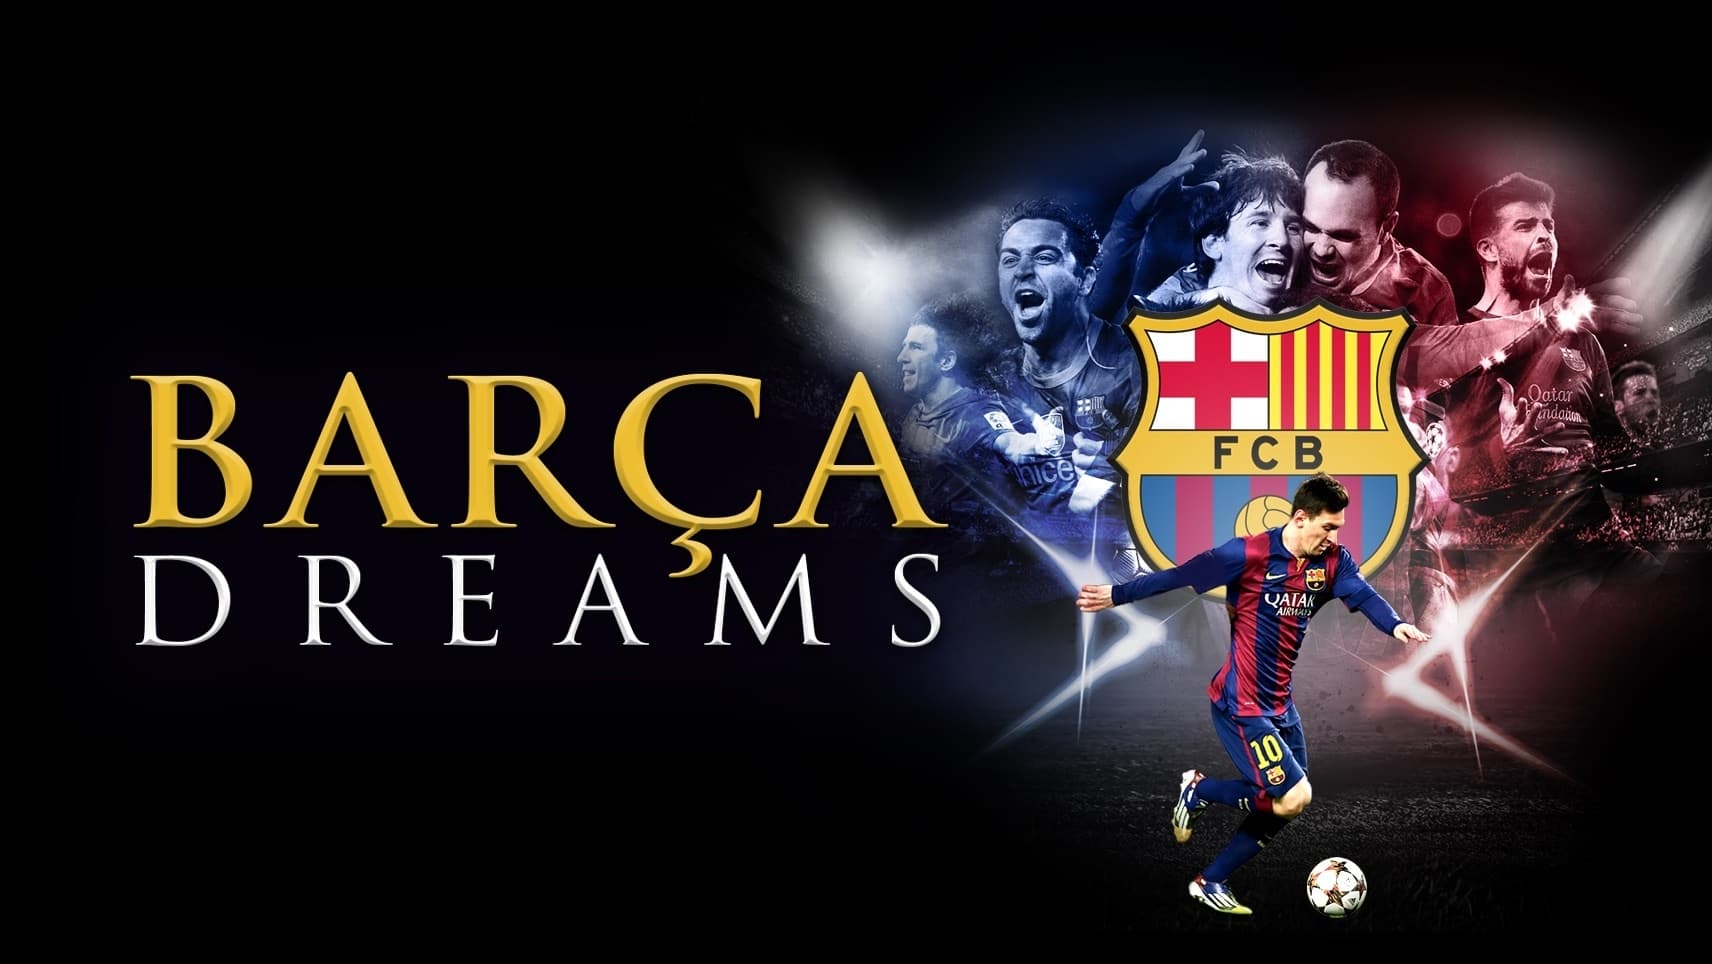 Barça Dreams (2015)